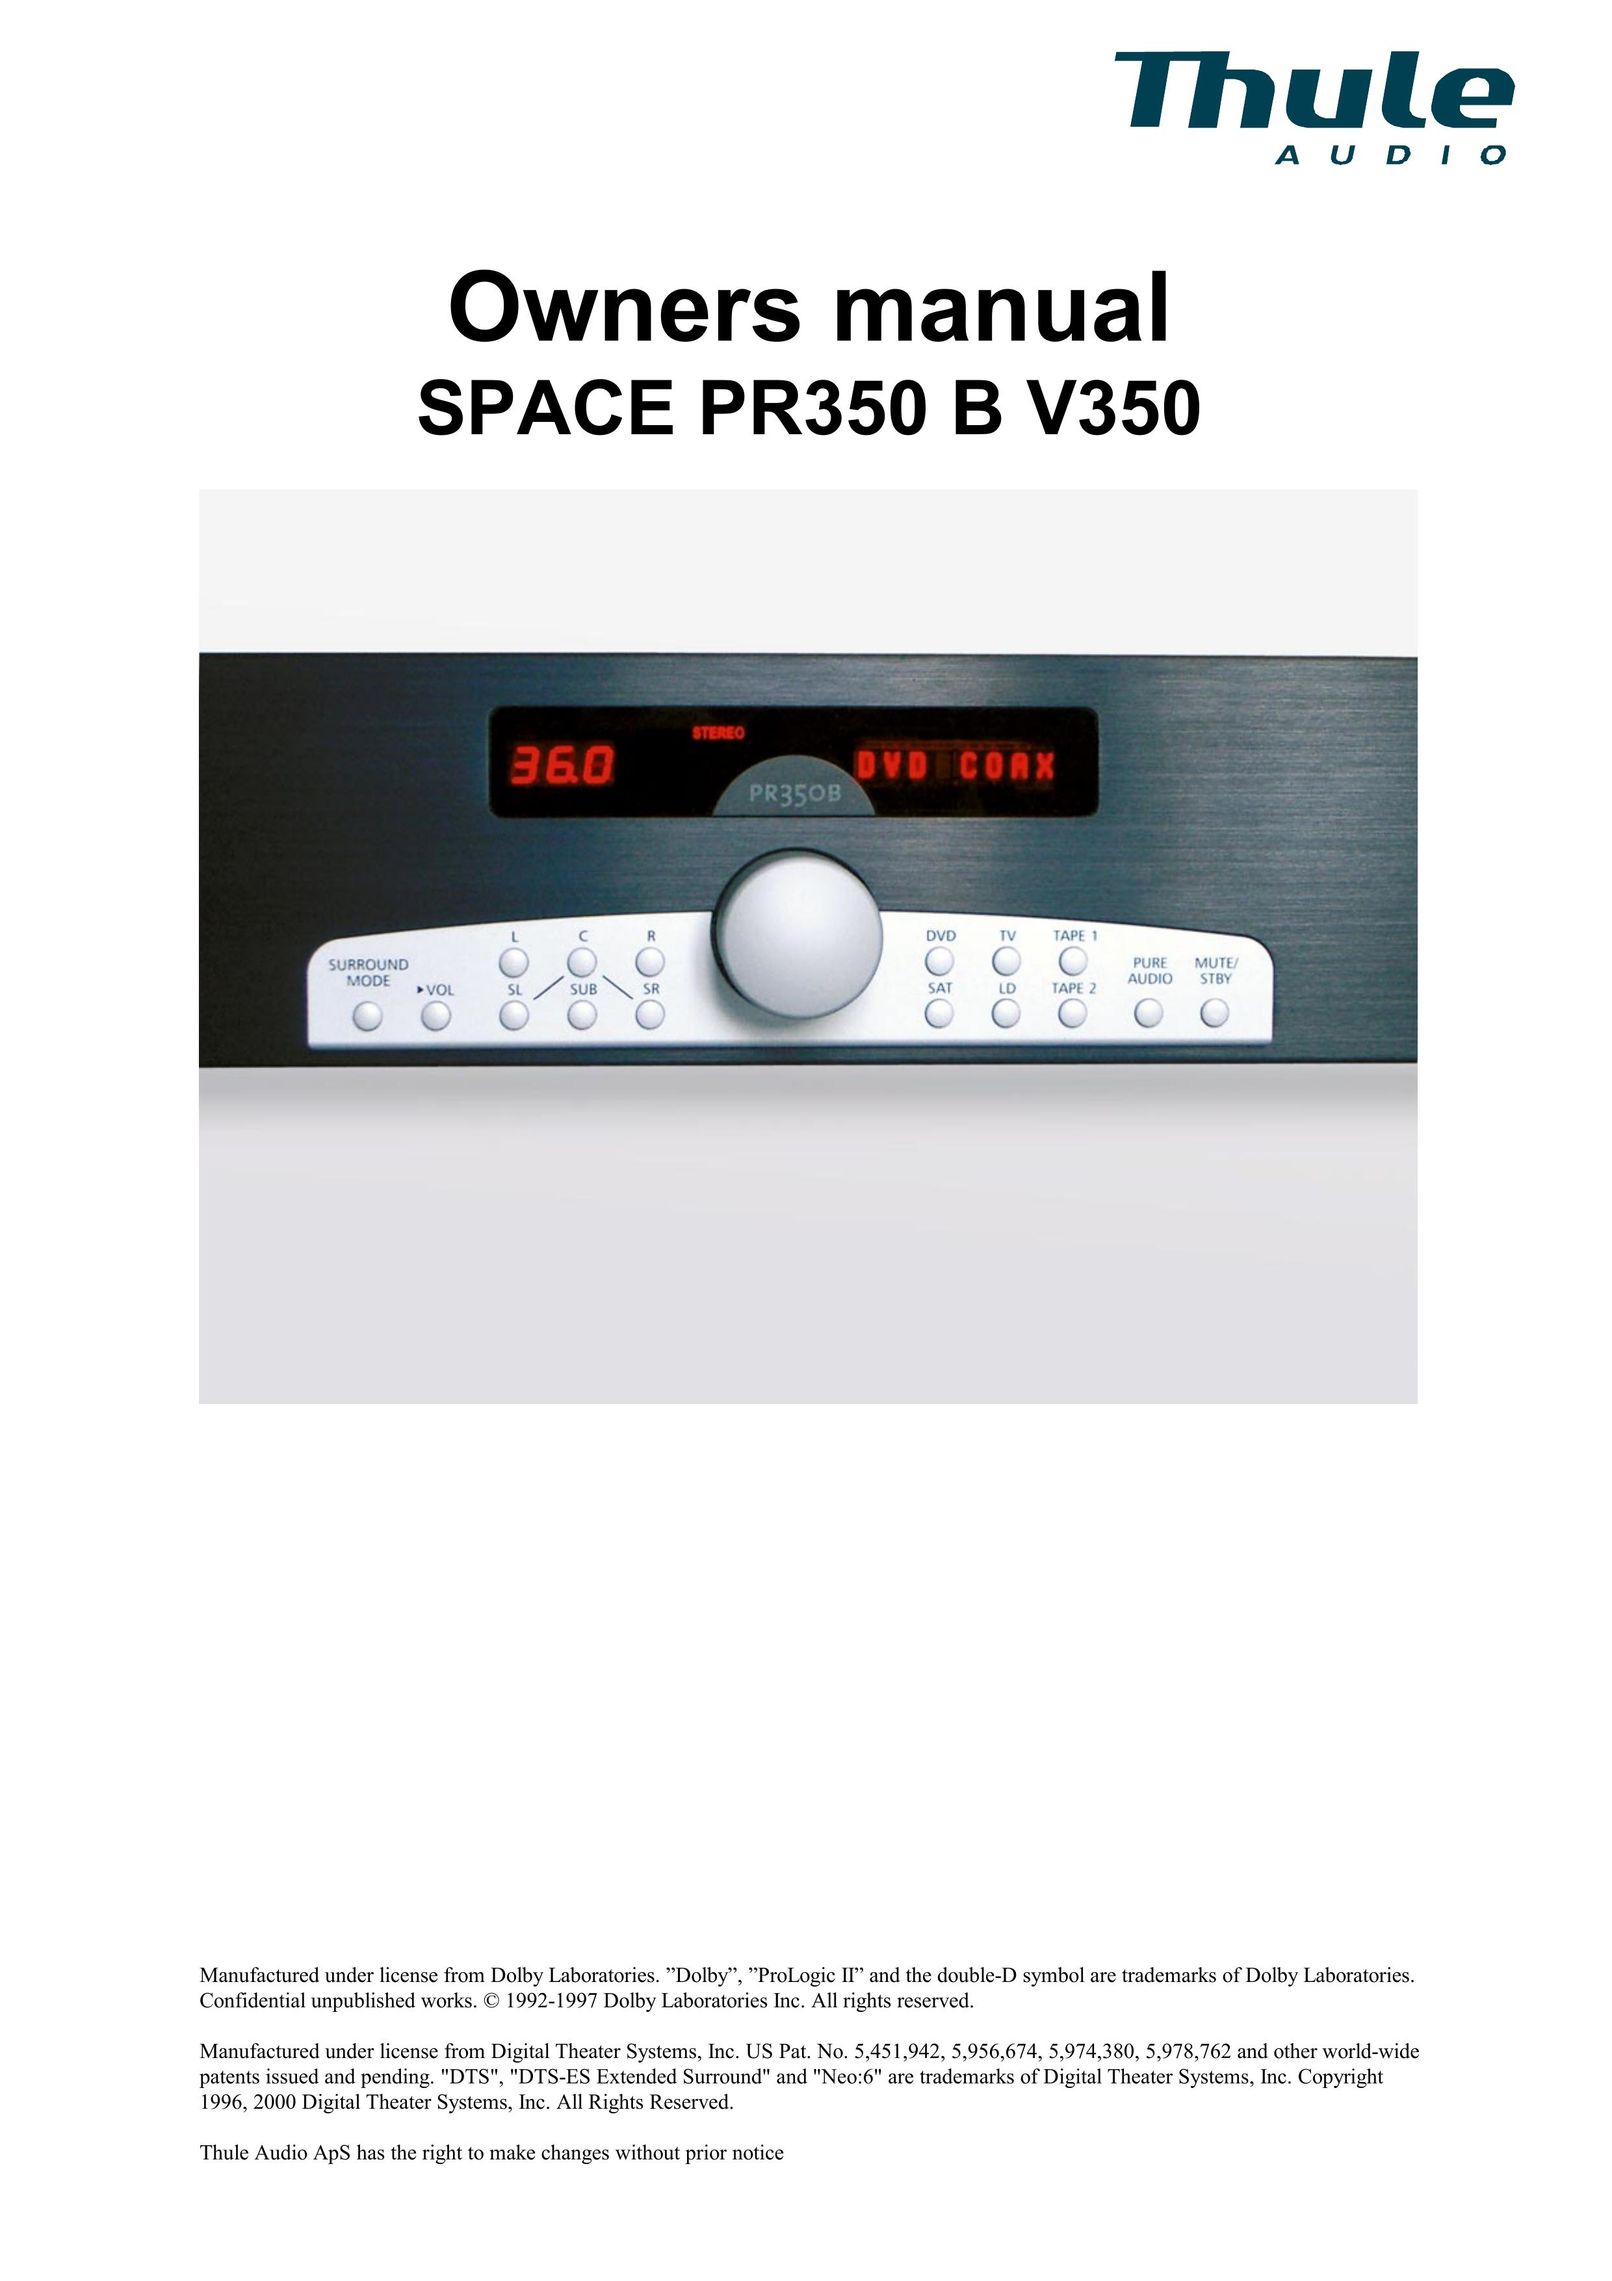 Thule PR350 B V350 DVD Player User Manual